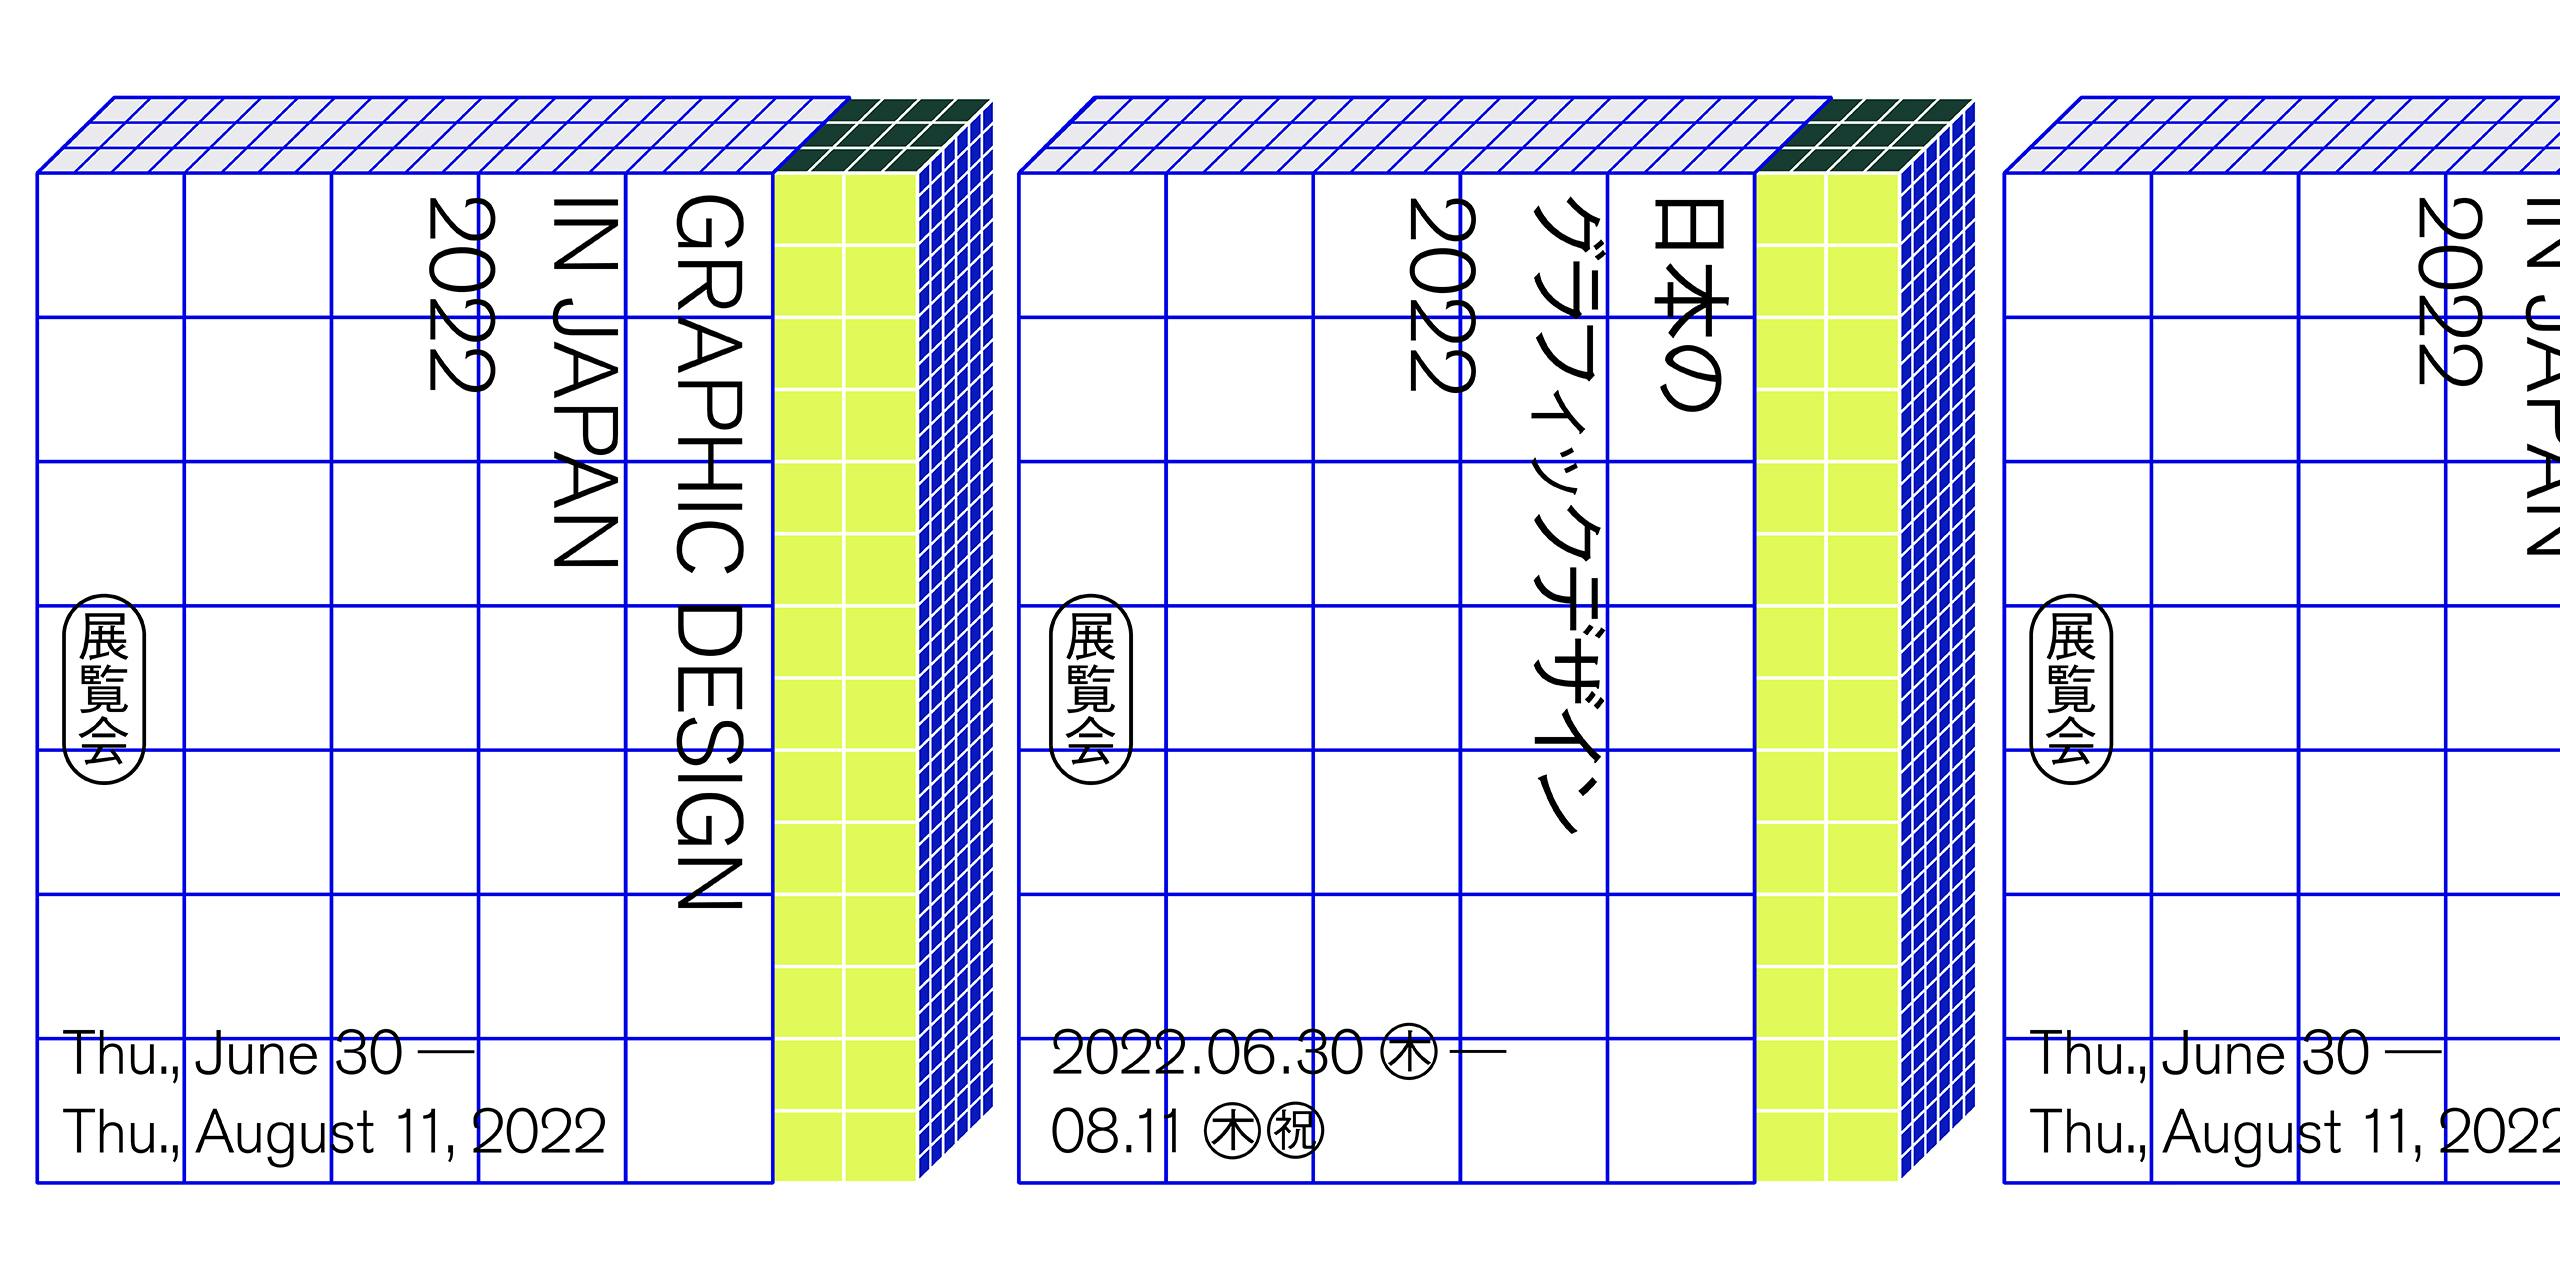 Graphic Design in Japan 2022